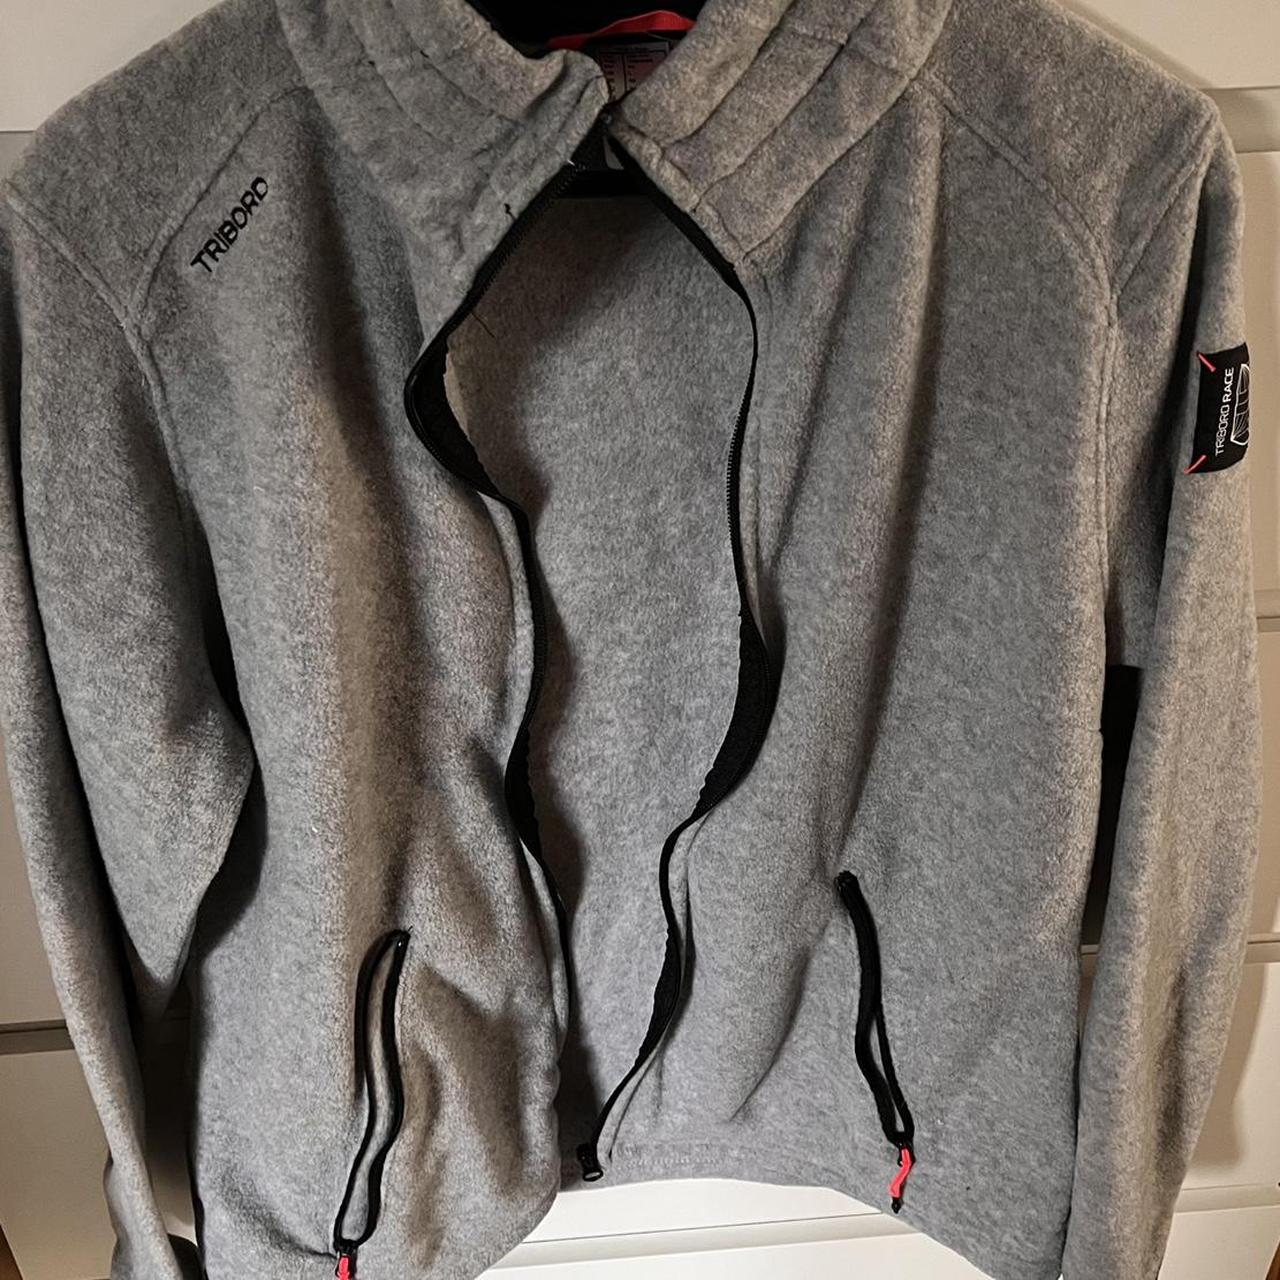 Product Image 1 - Fleece/ cotton jacket from Decathlon.